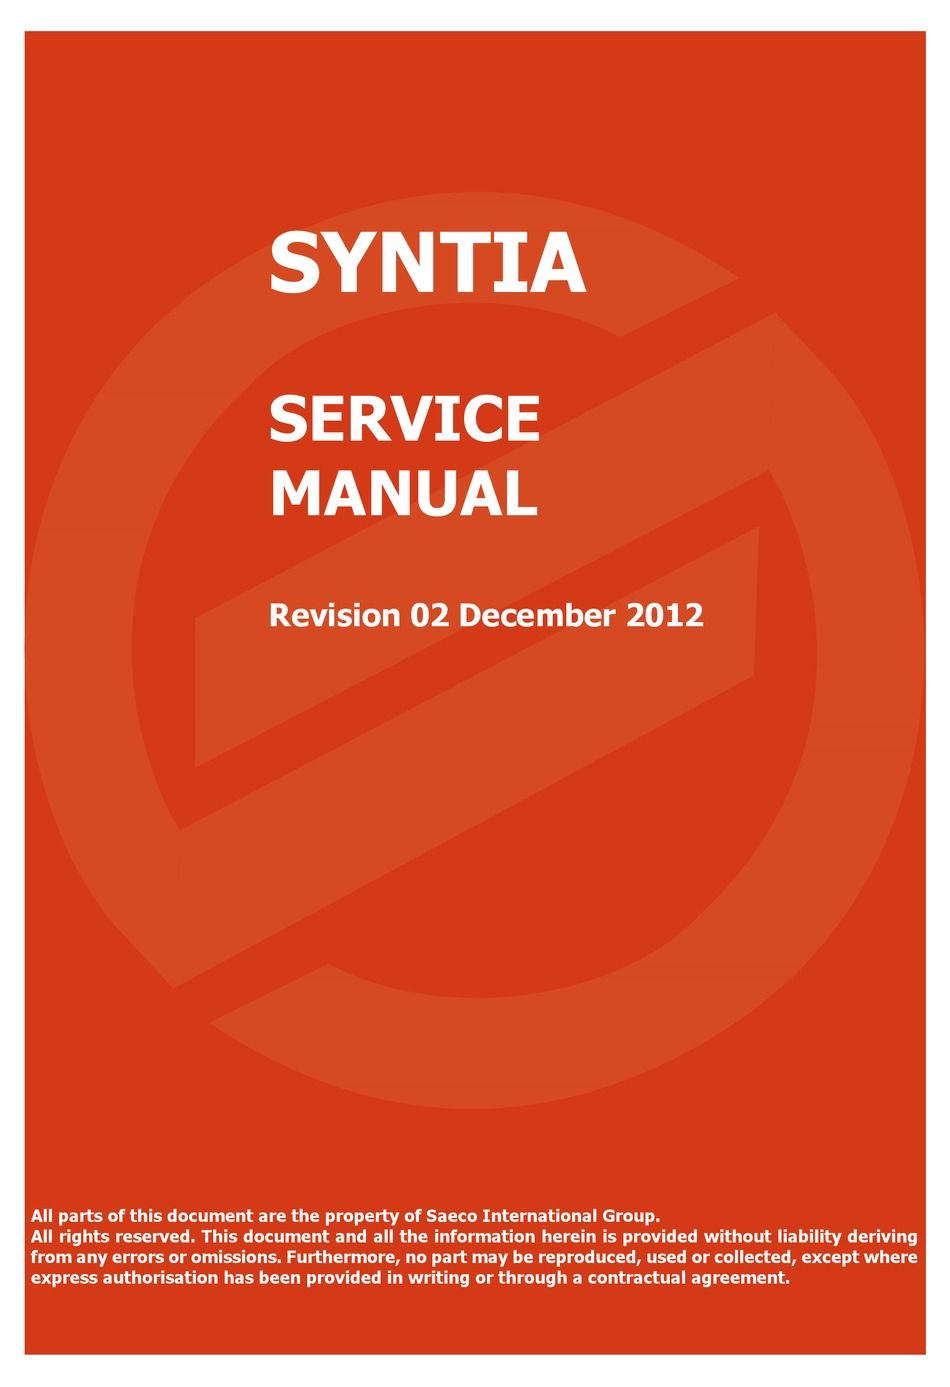 SAECO SYNTIA SERVICE MANUAL Pdf Download | ManualsLib